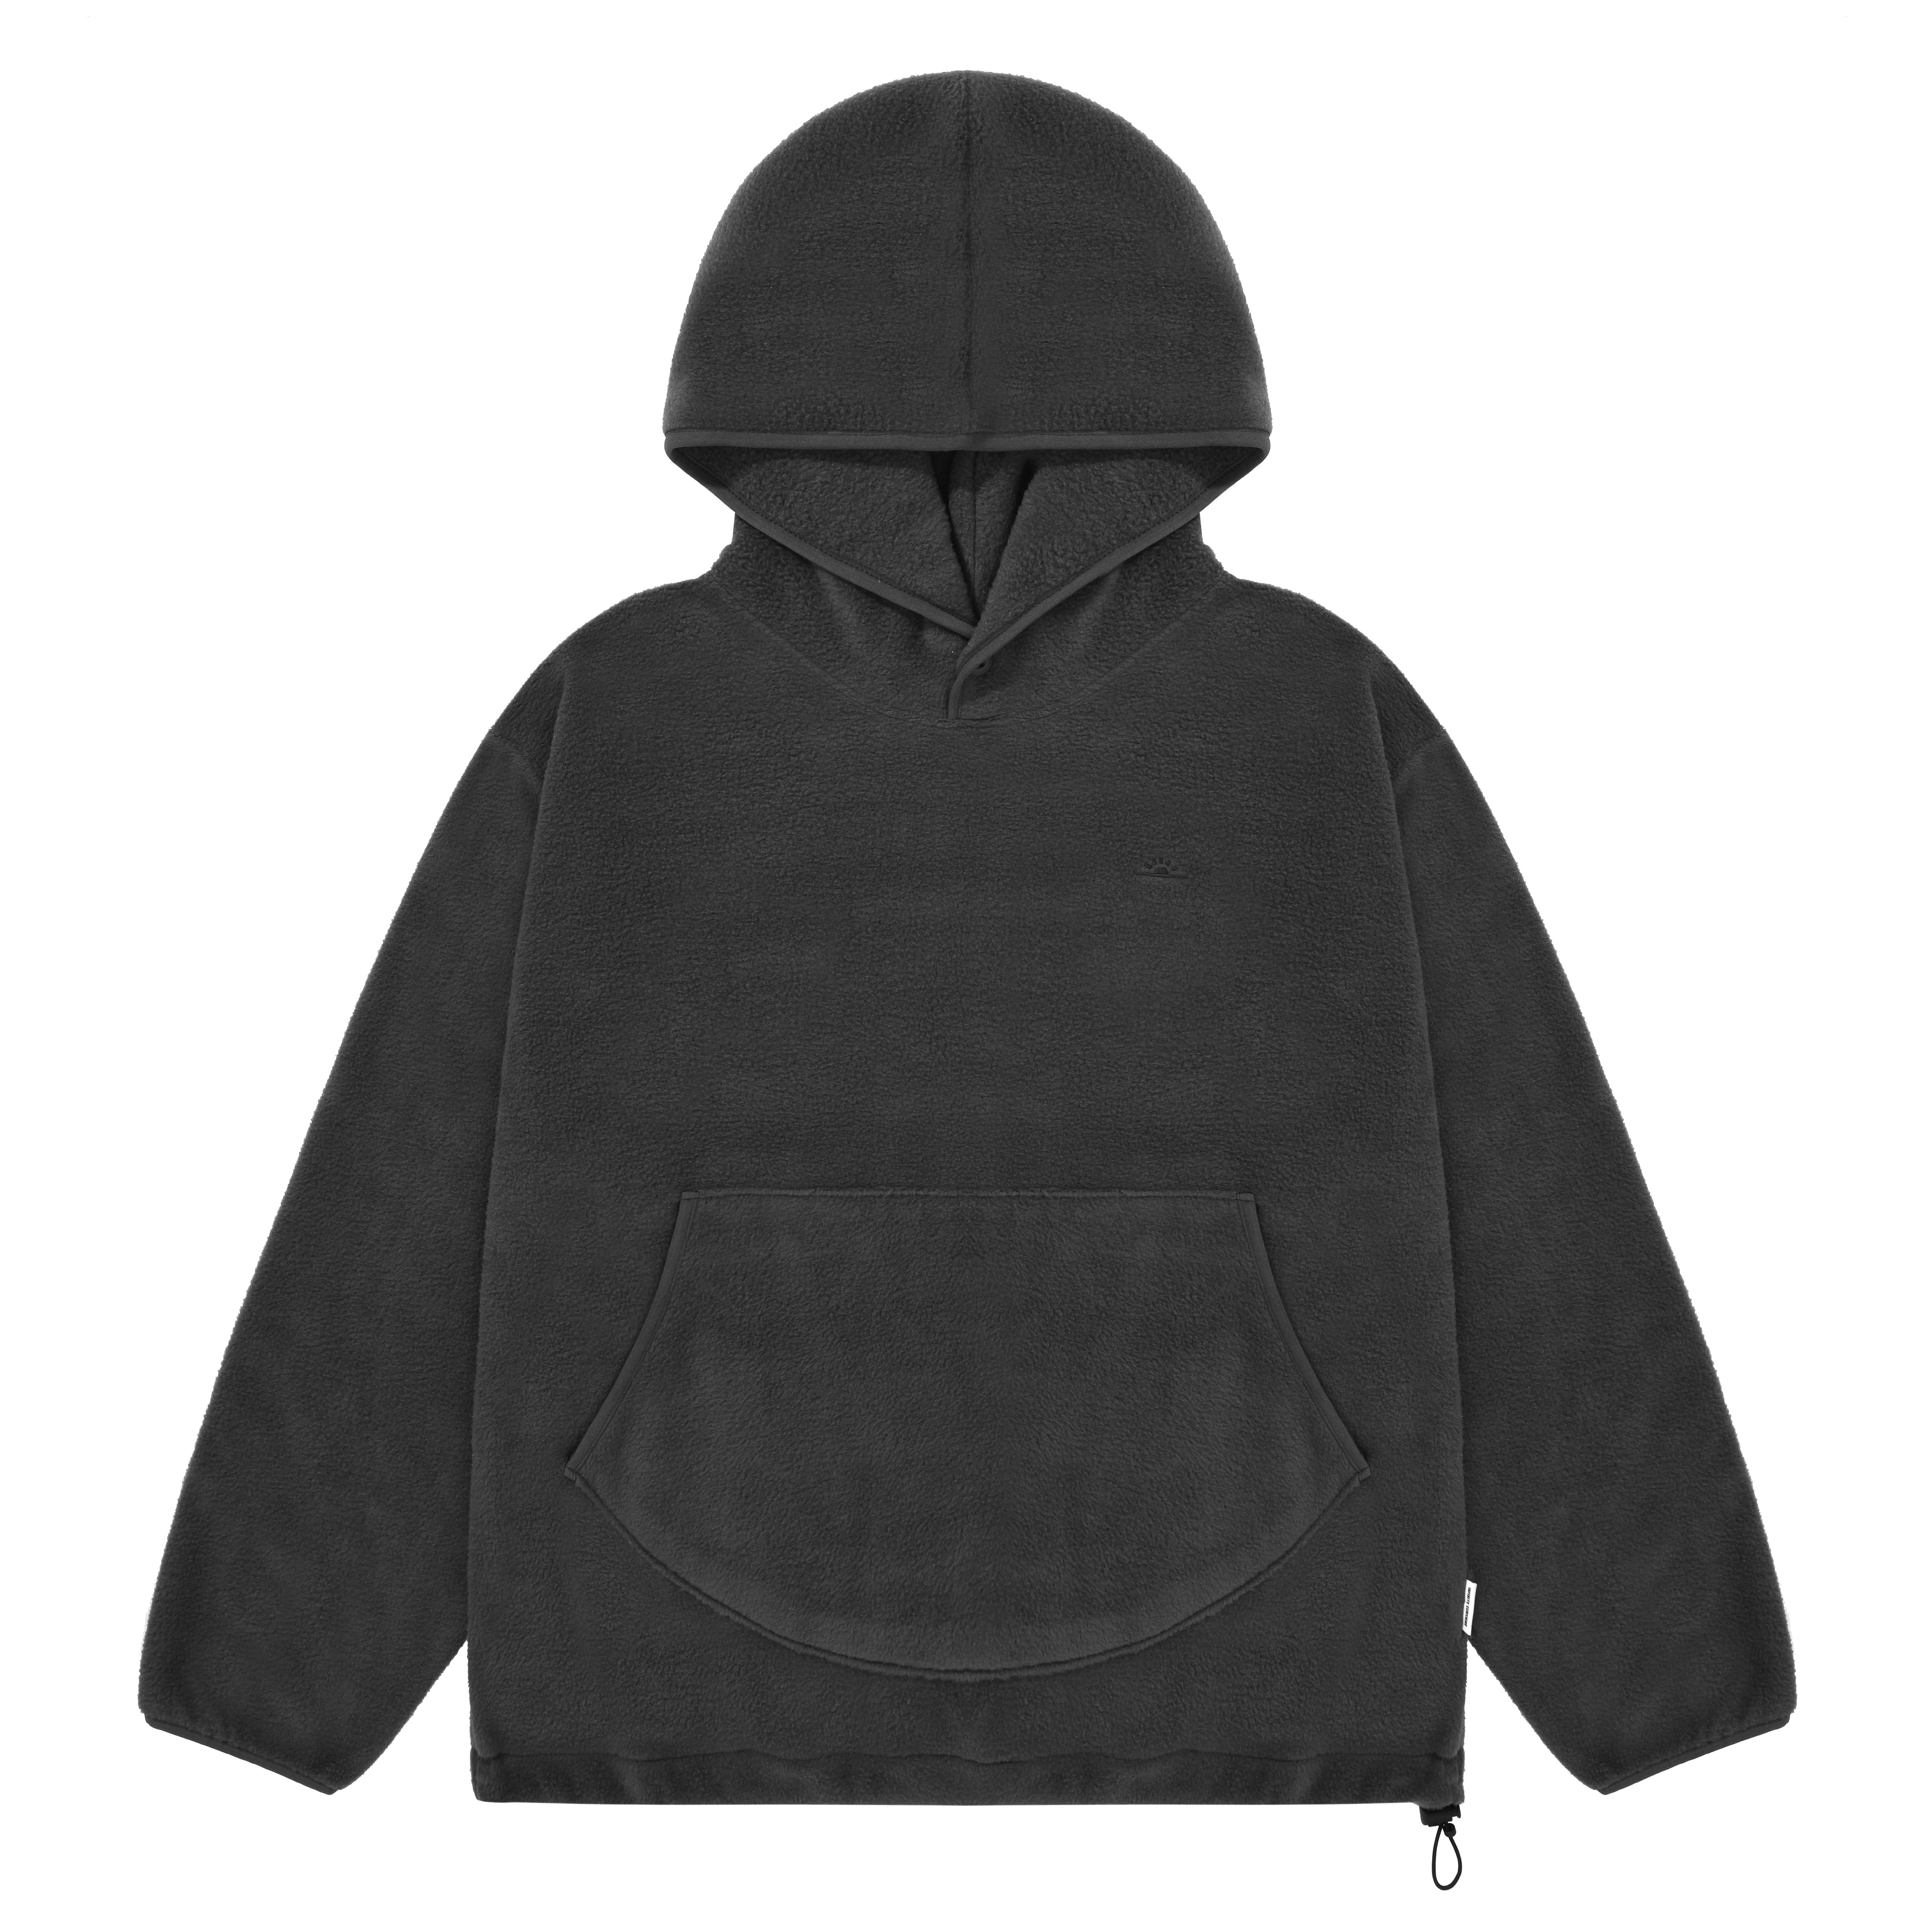 Sunrise fleece snap hoodie dark gray